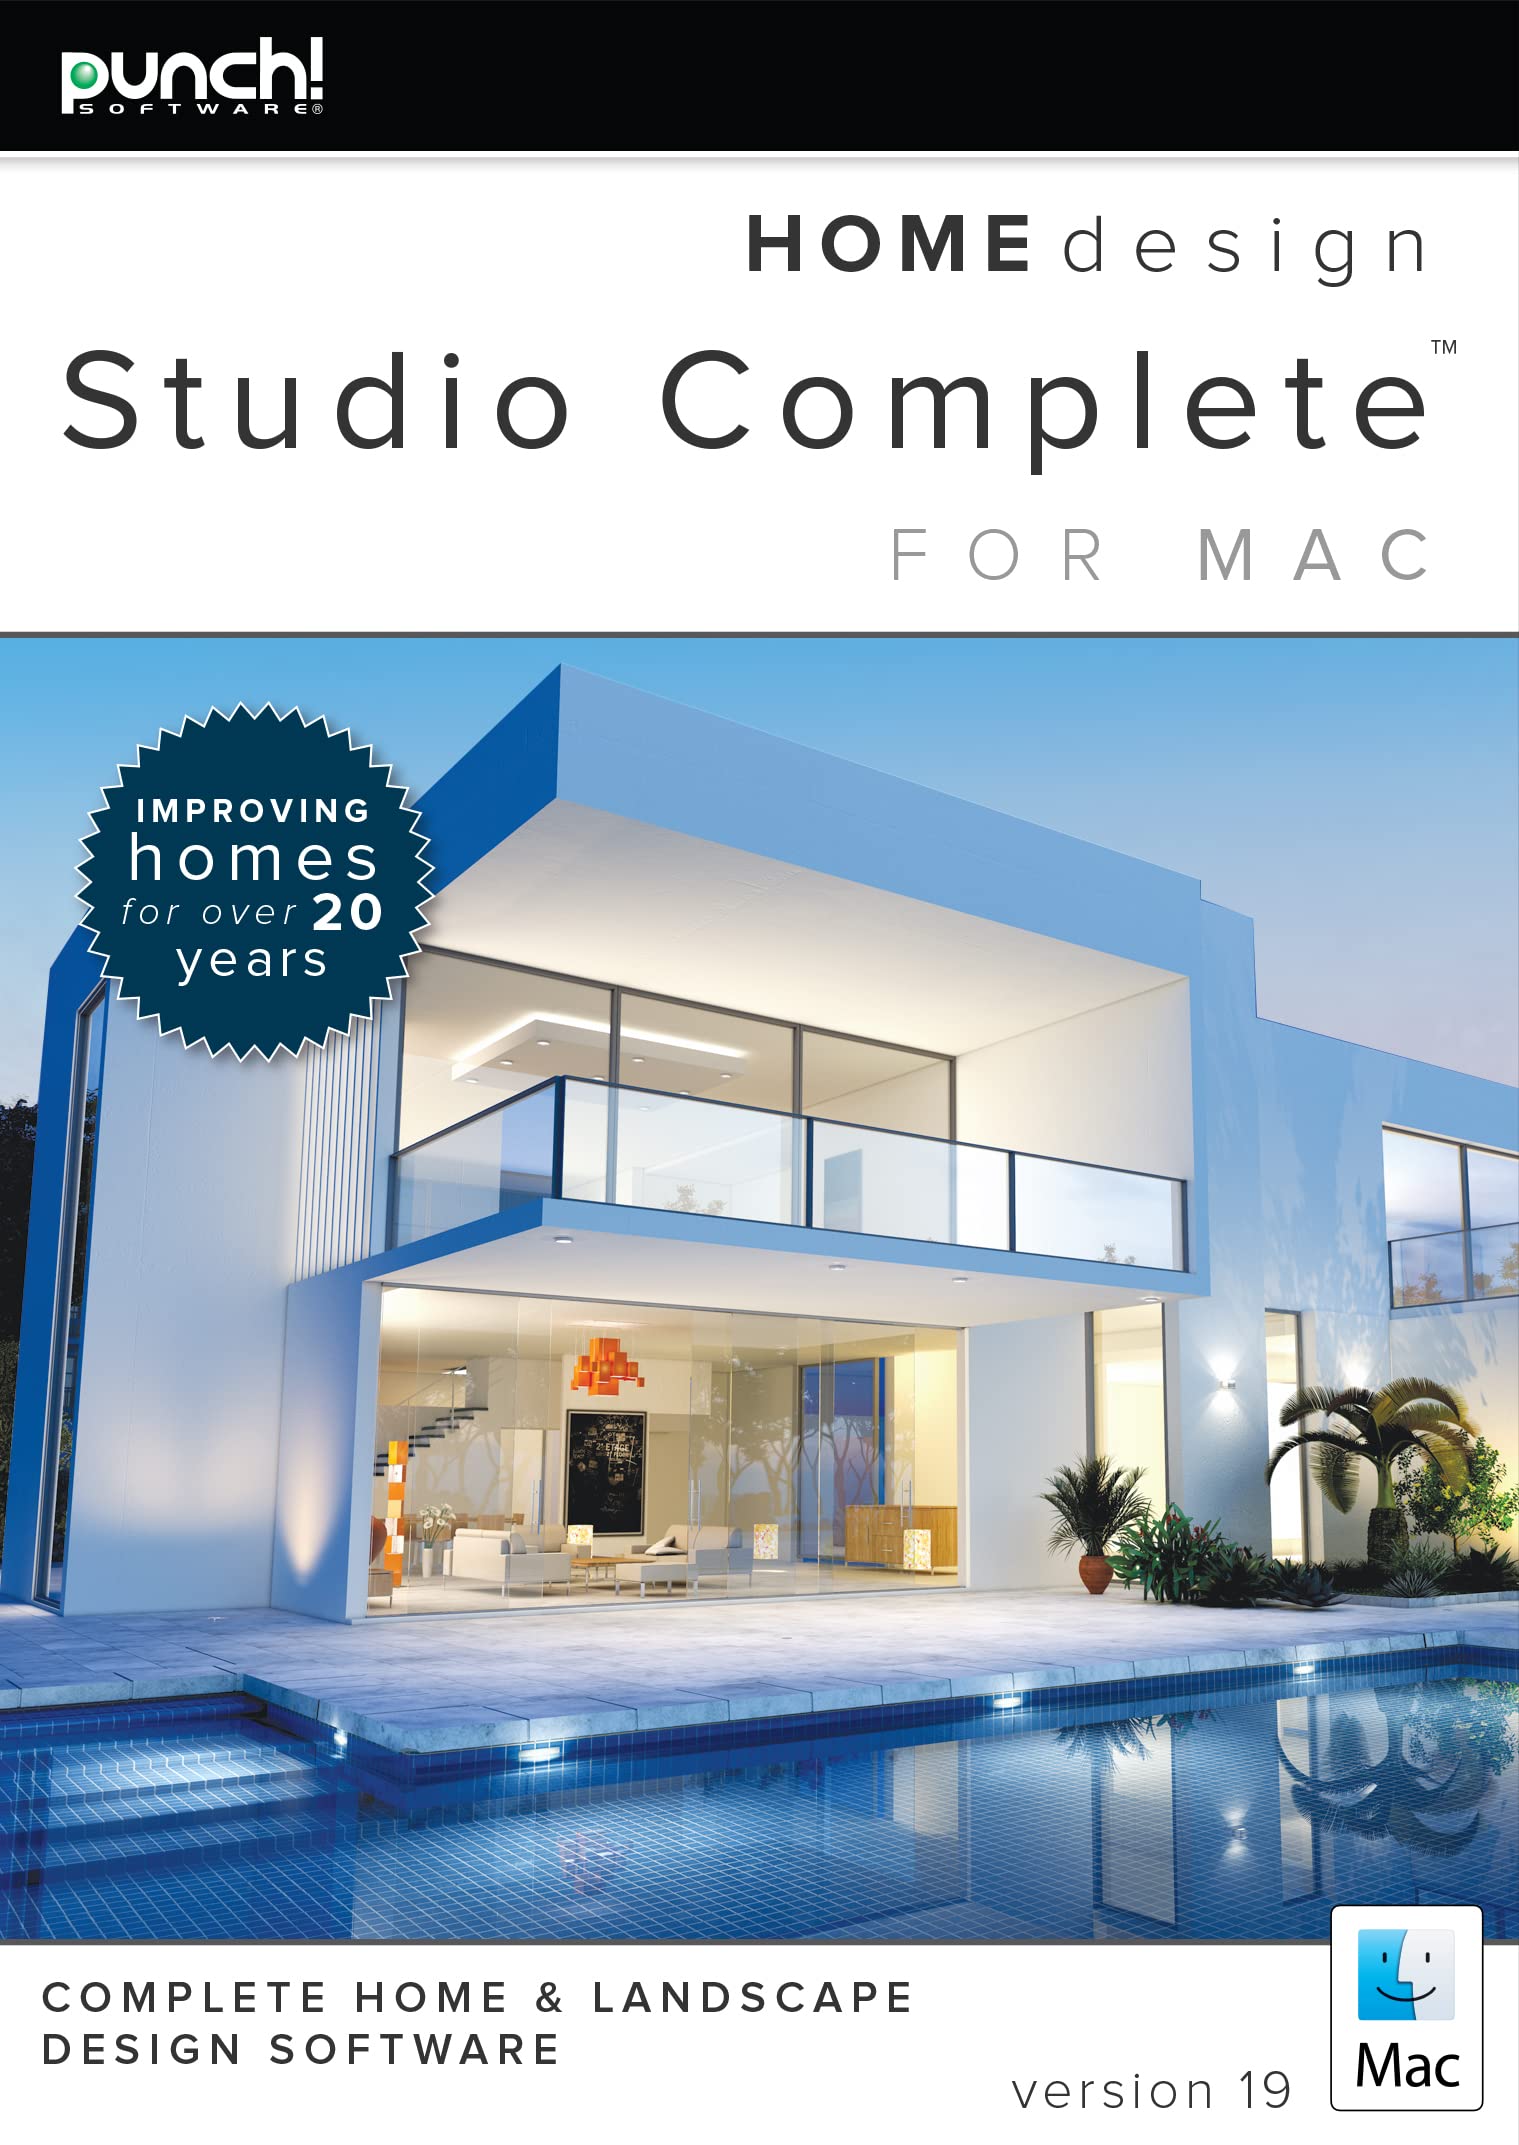 punch home design studio pro for mac v17 review